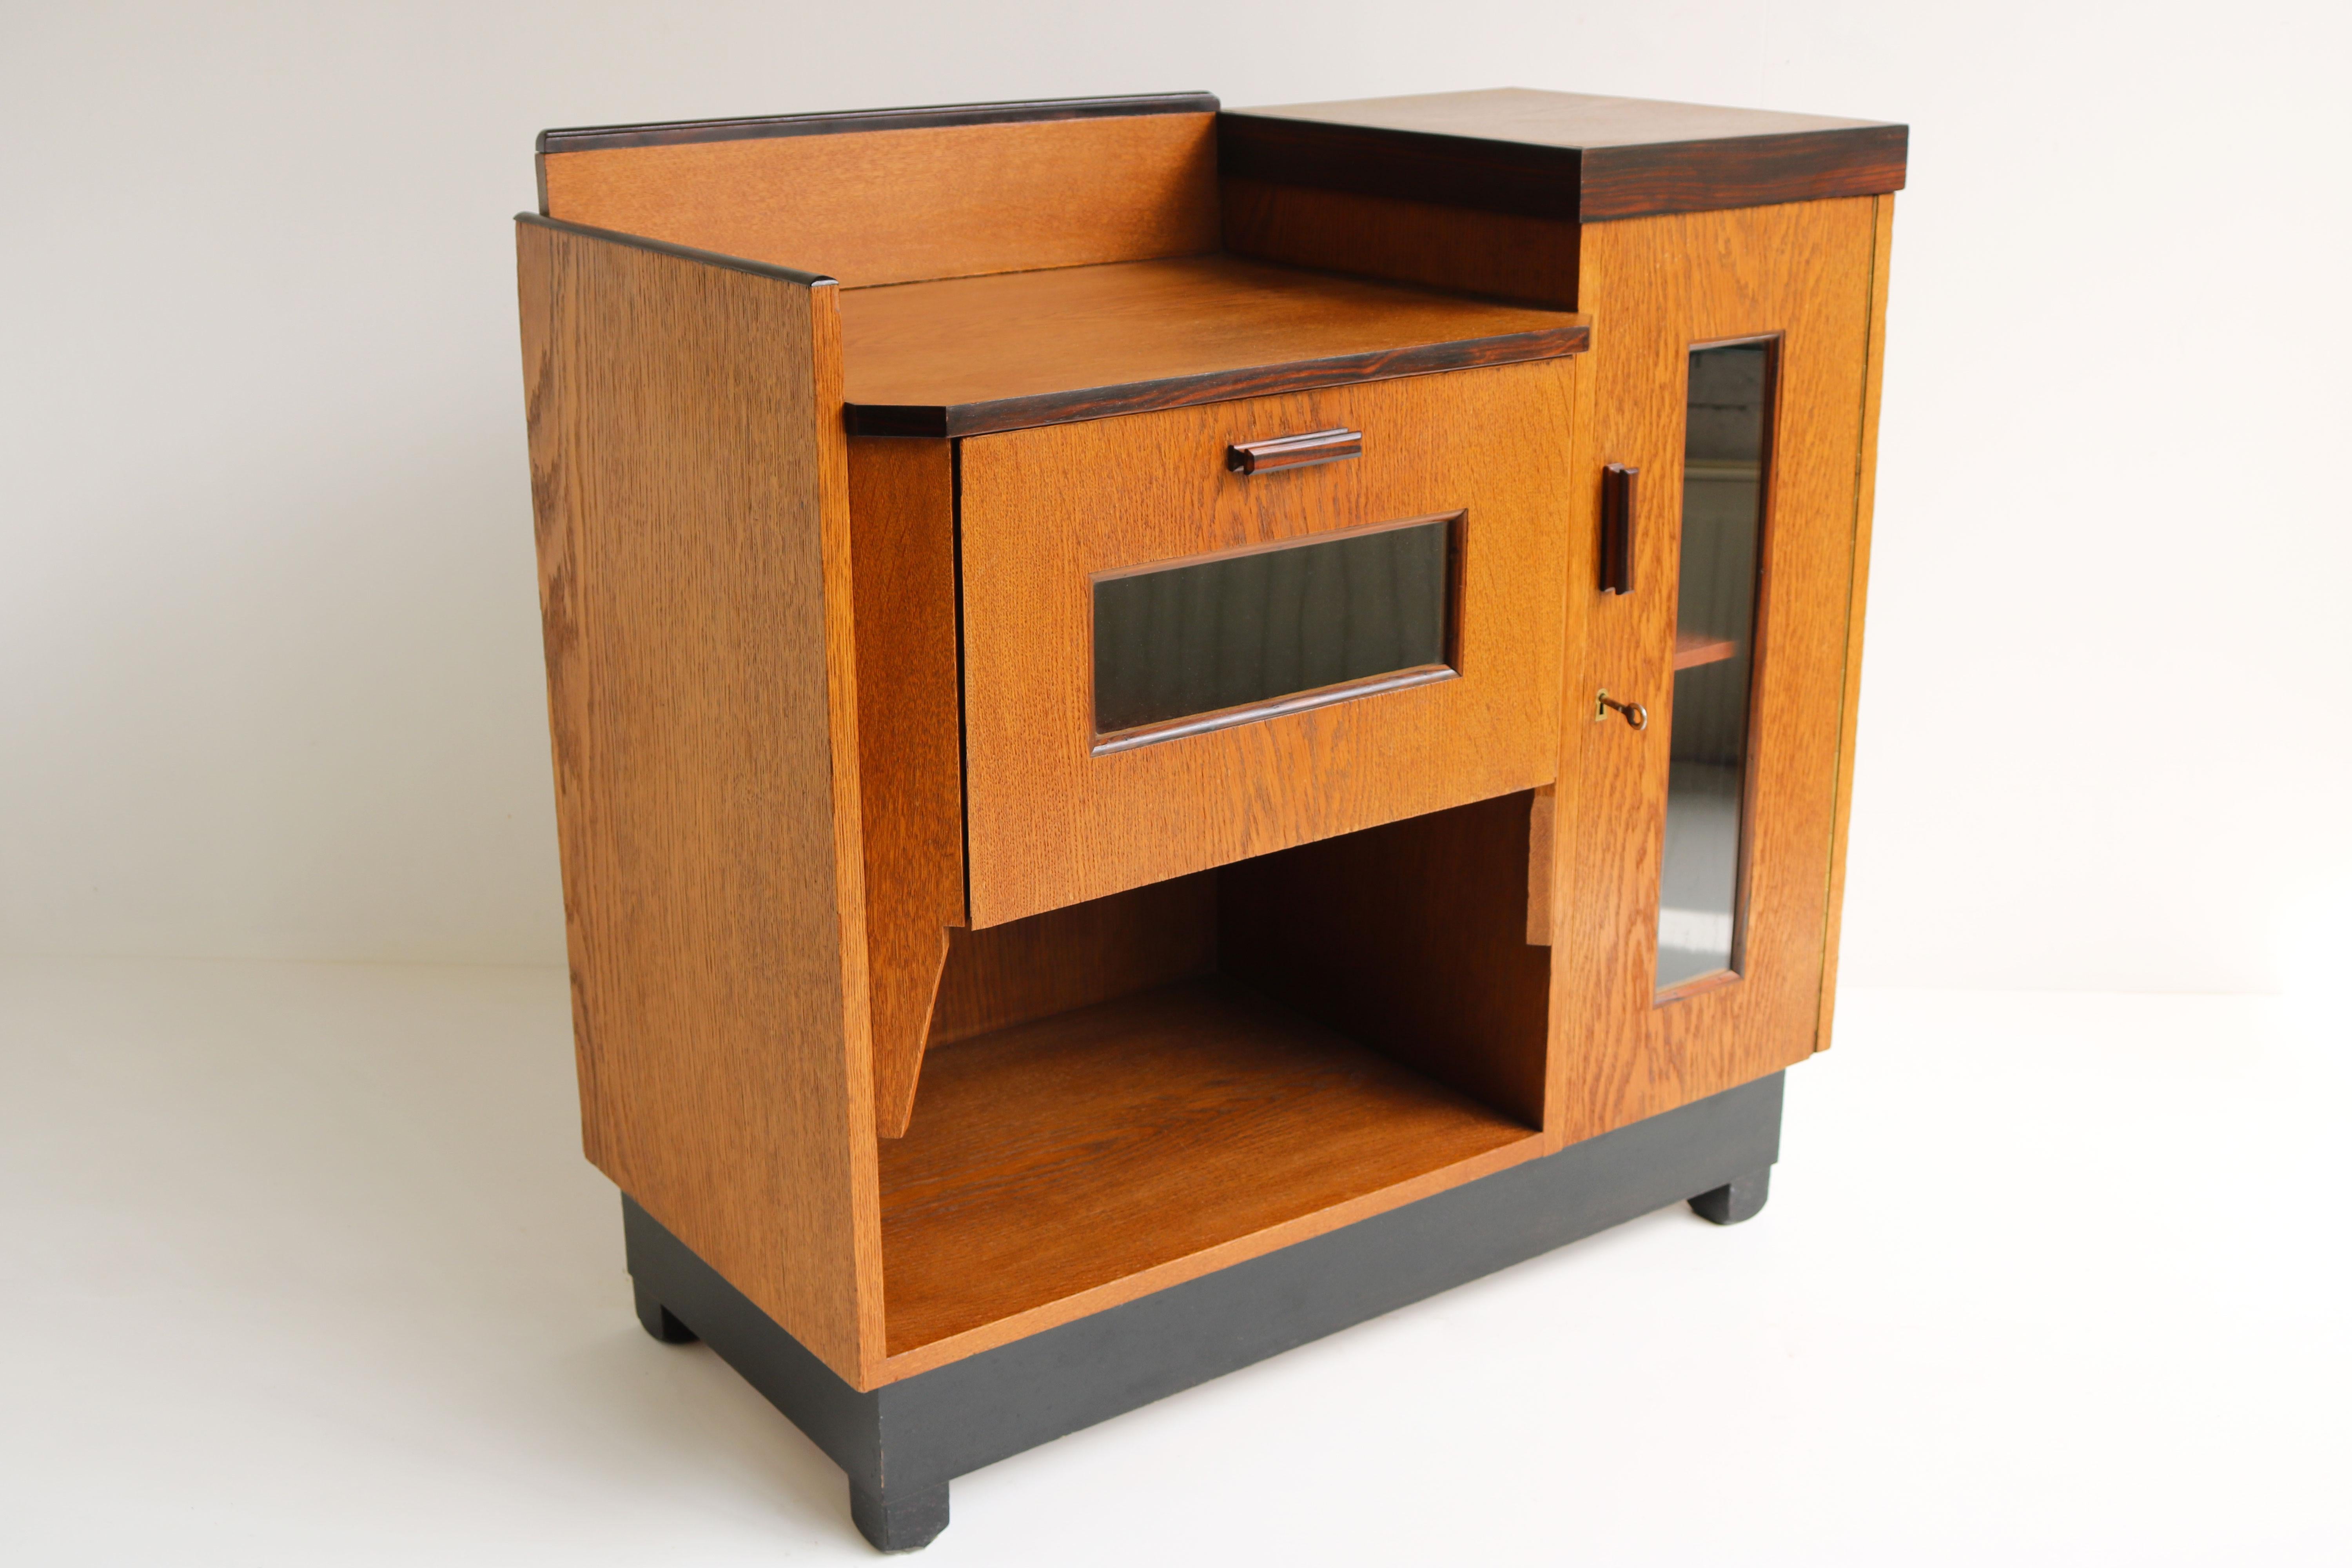 Early 20th Century Dutch Art Deco Design by P.E.L Izeren Amsterdam School Tea Cabinet 1920 Oak  For Sale